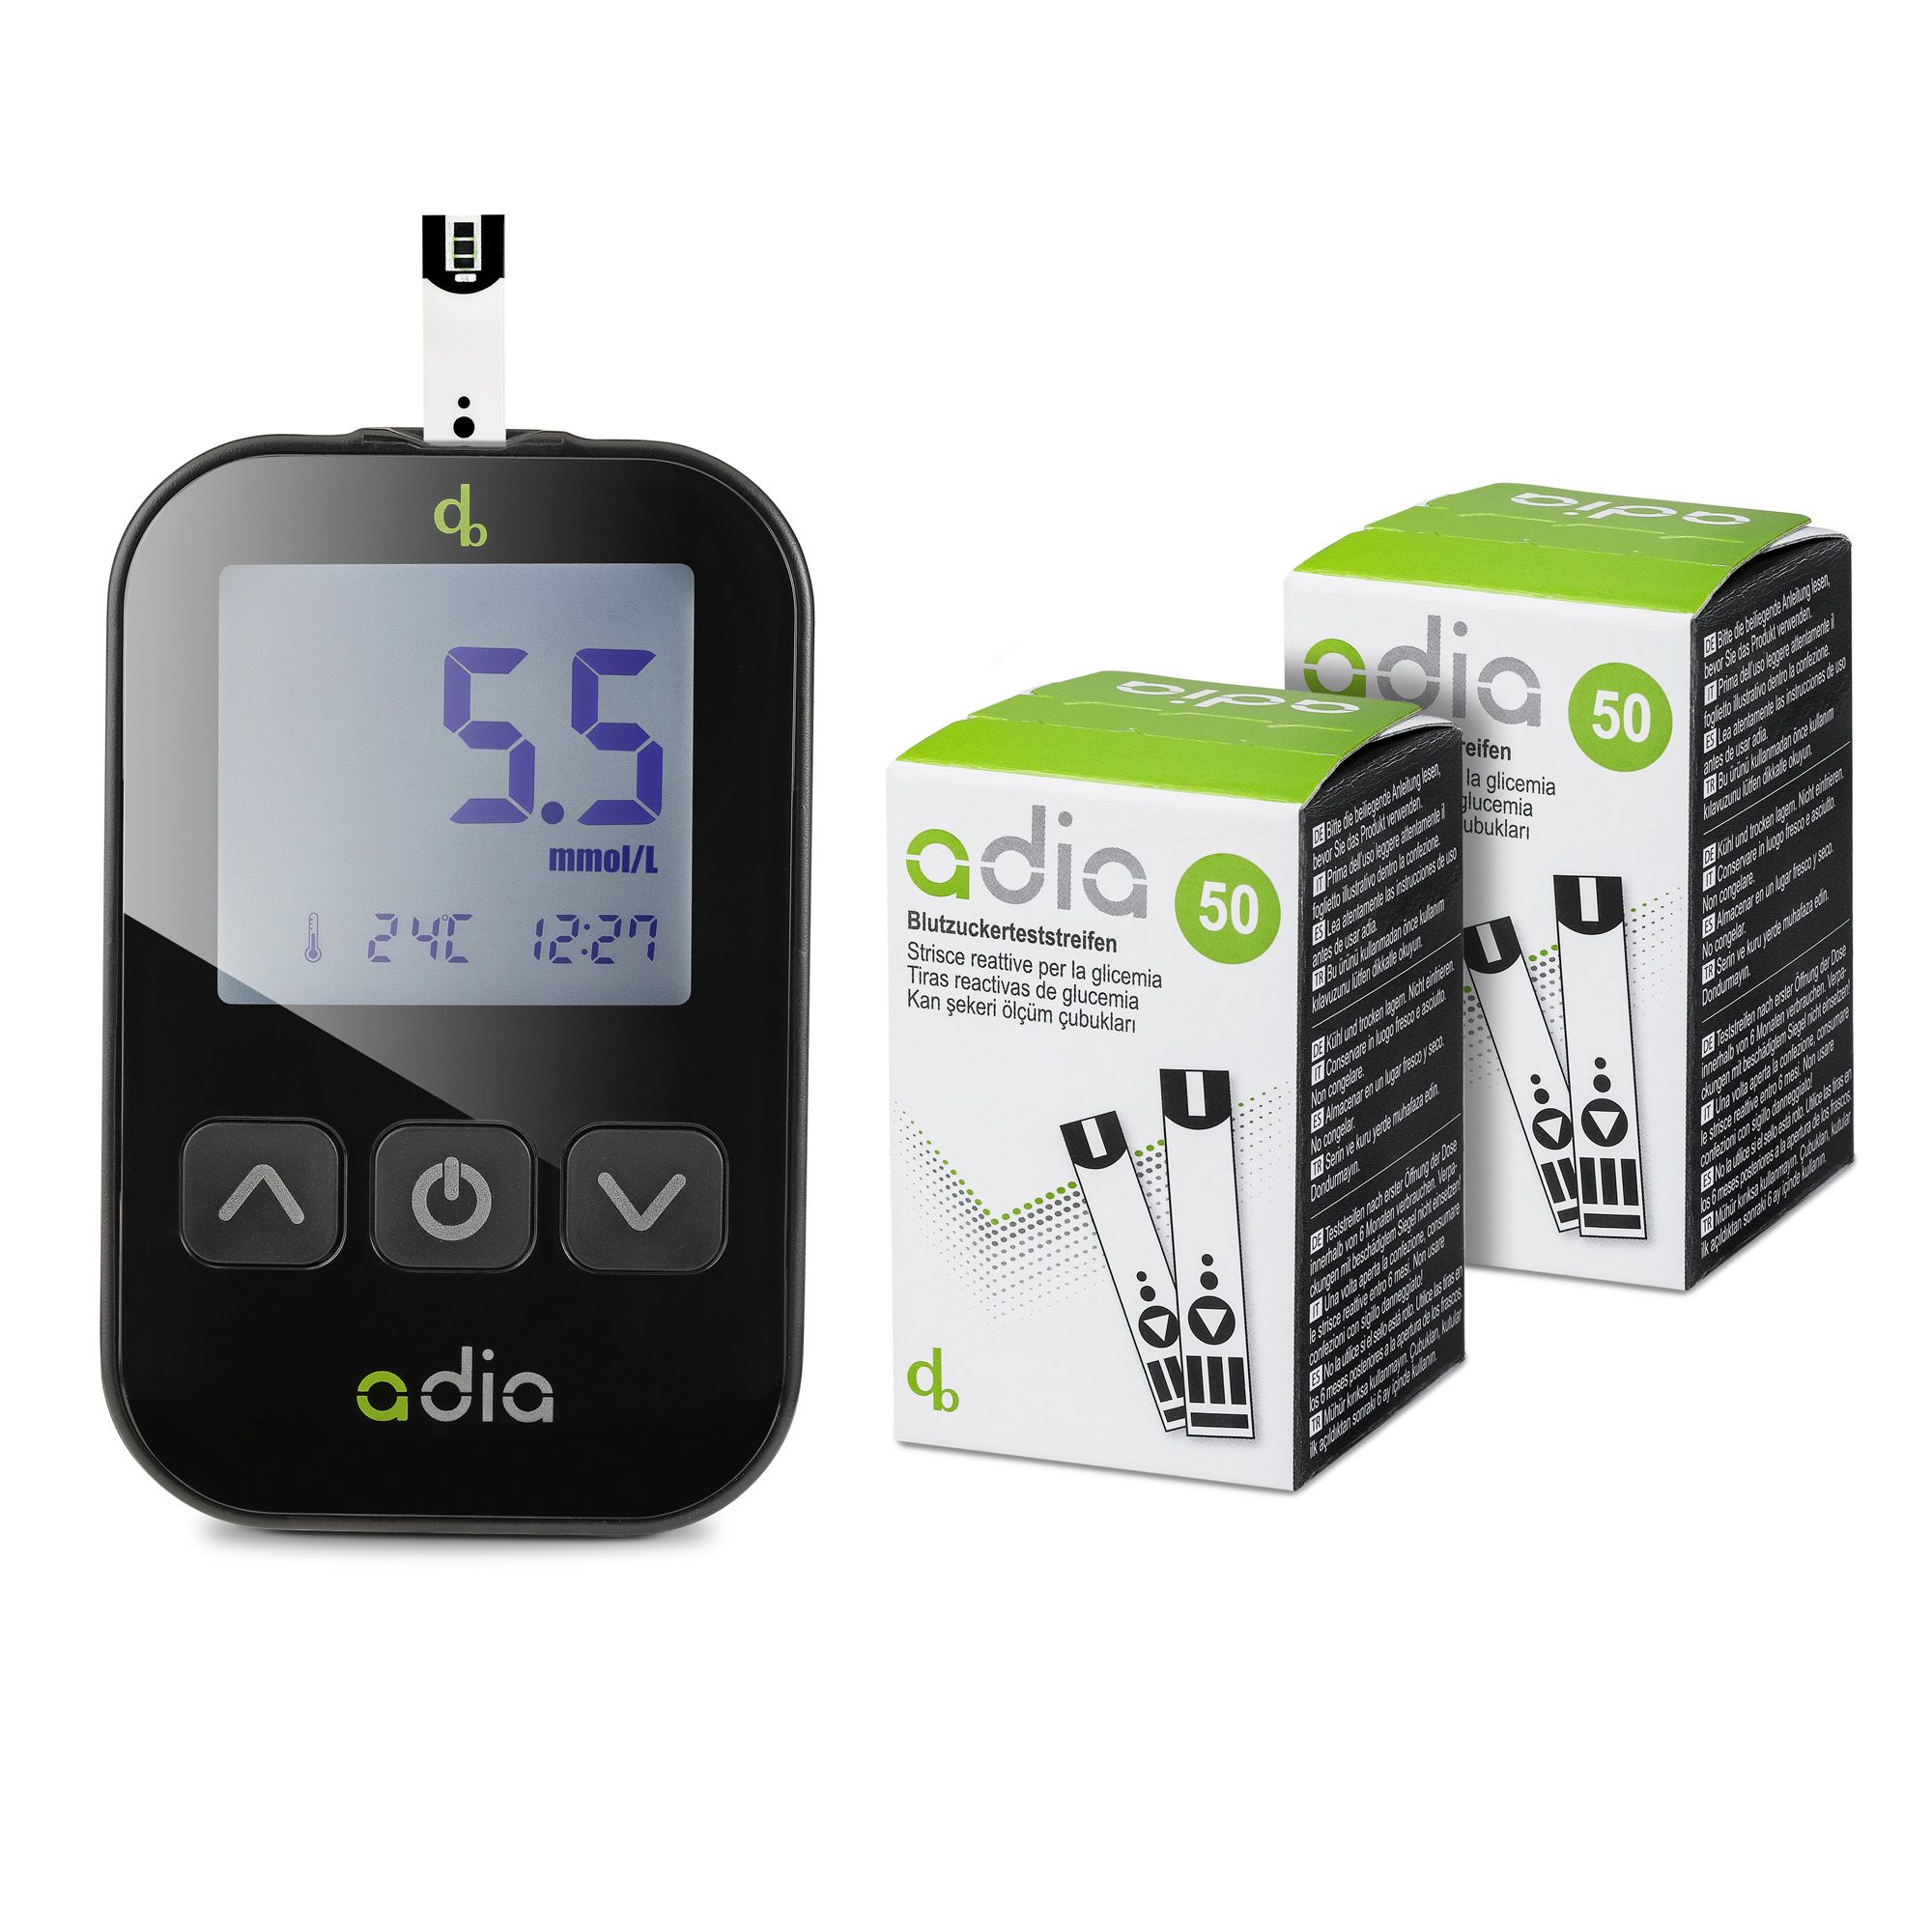 Adia diabetes set: blood sugar measuring device (MMOL/L) with 110 blood sugar test strips